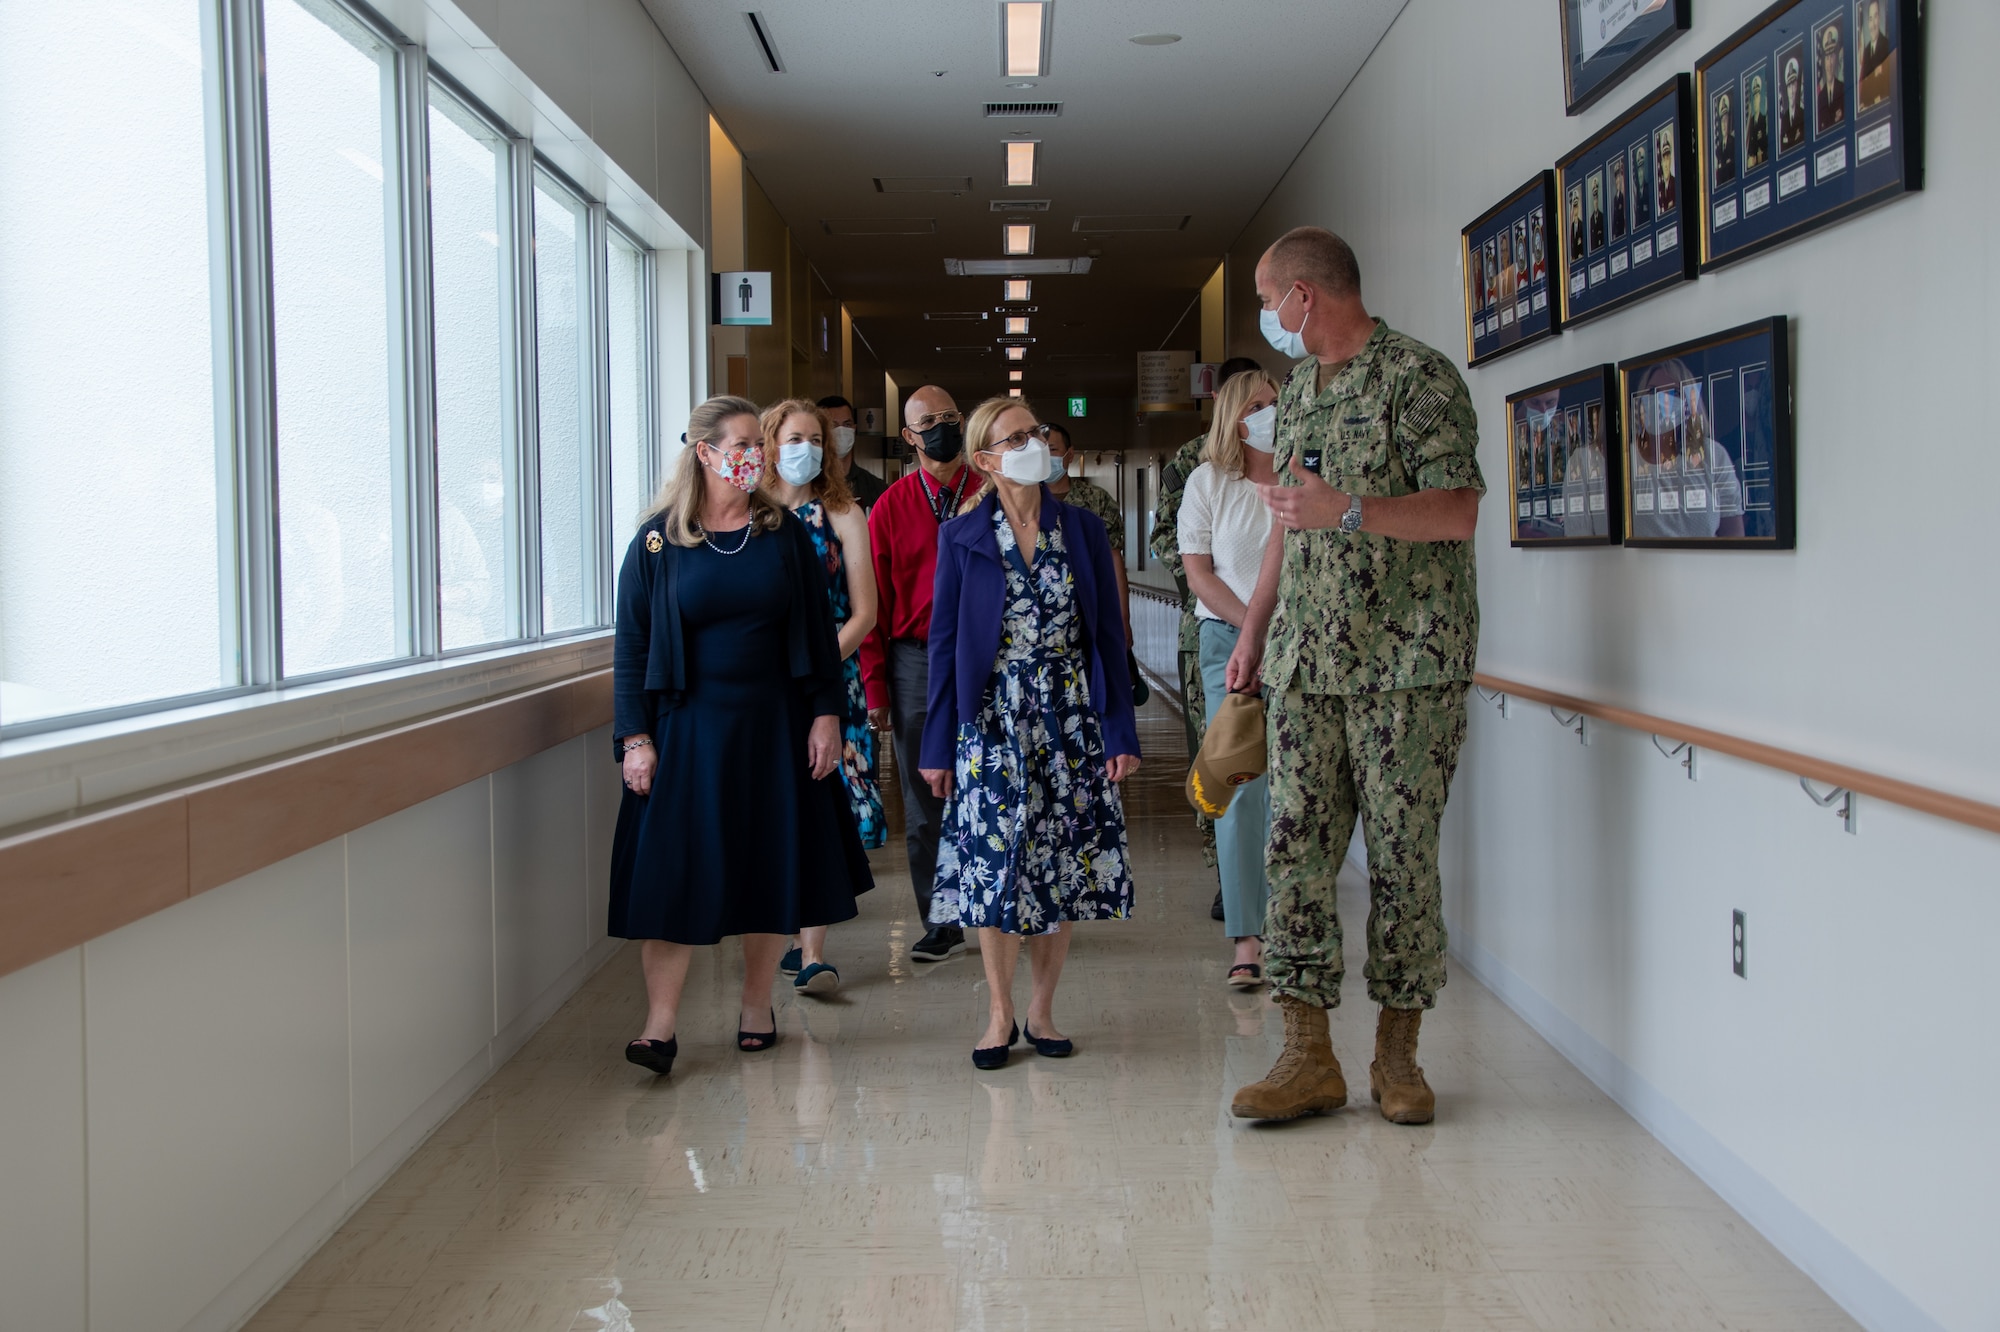 A seaman gives a tour of a hospital